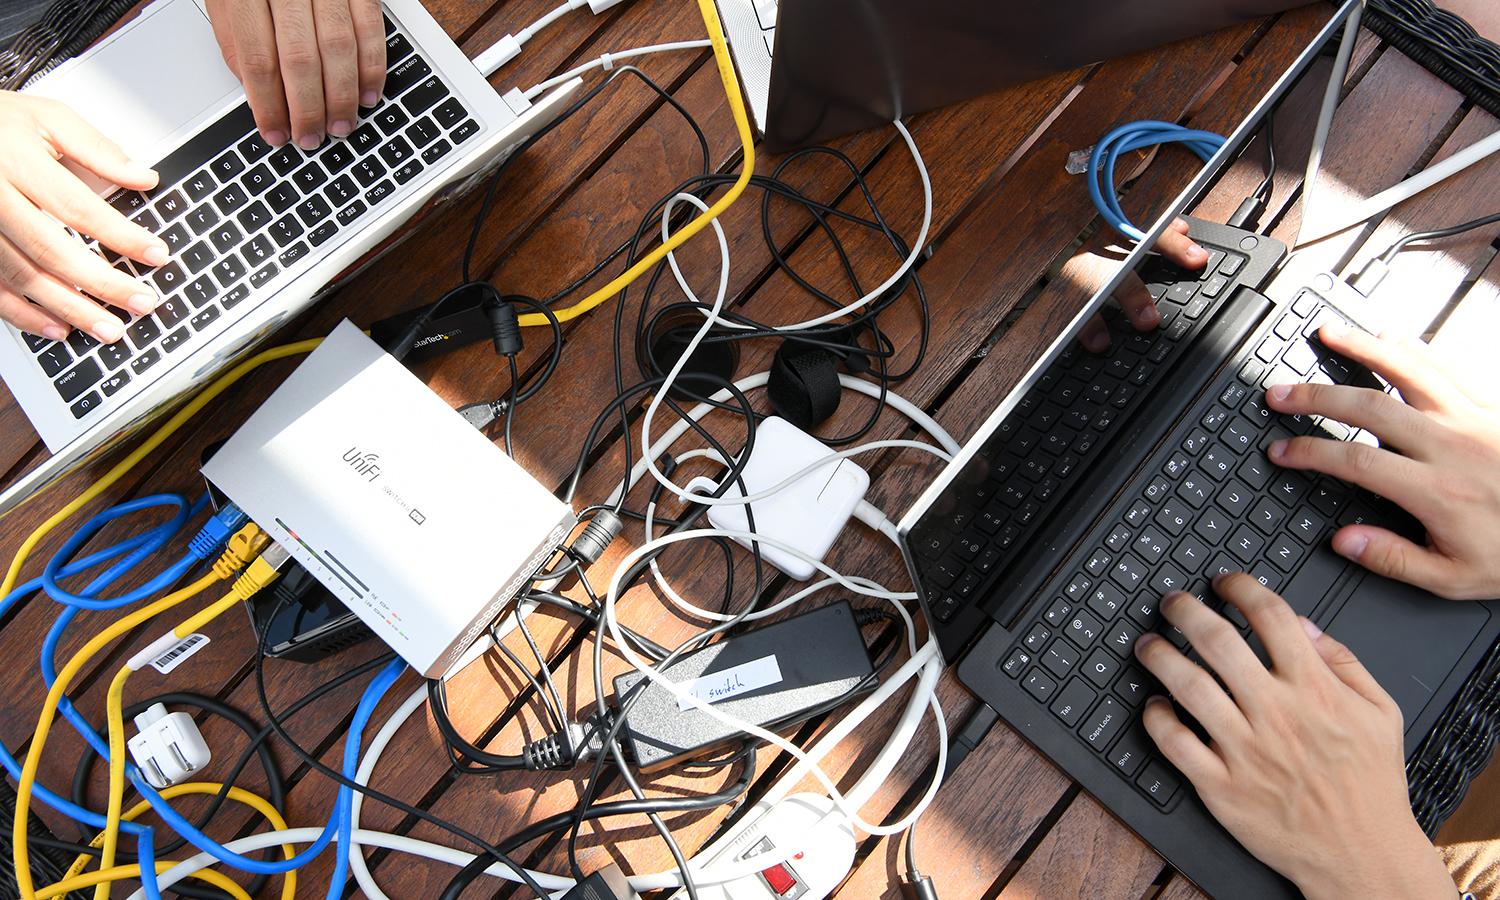 Military cyber warfare operators work on laptops